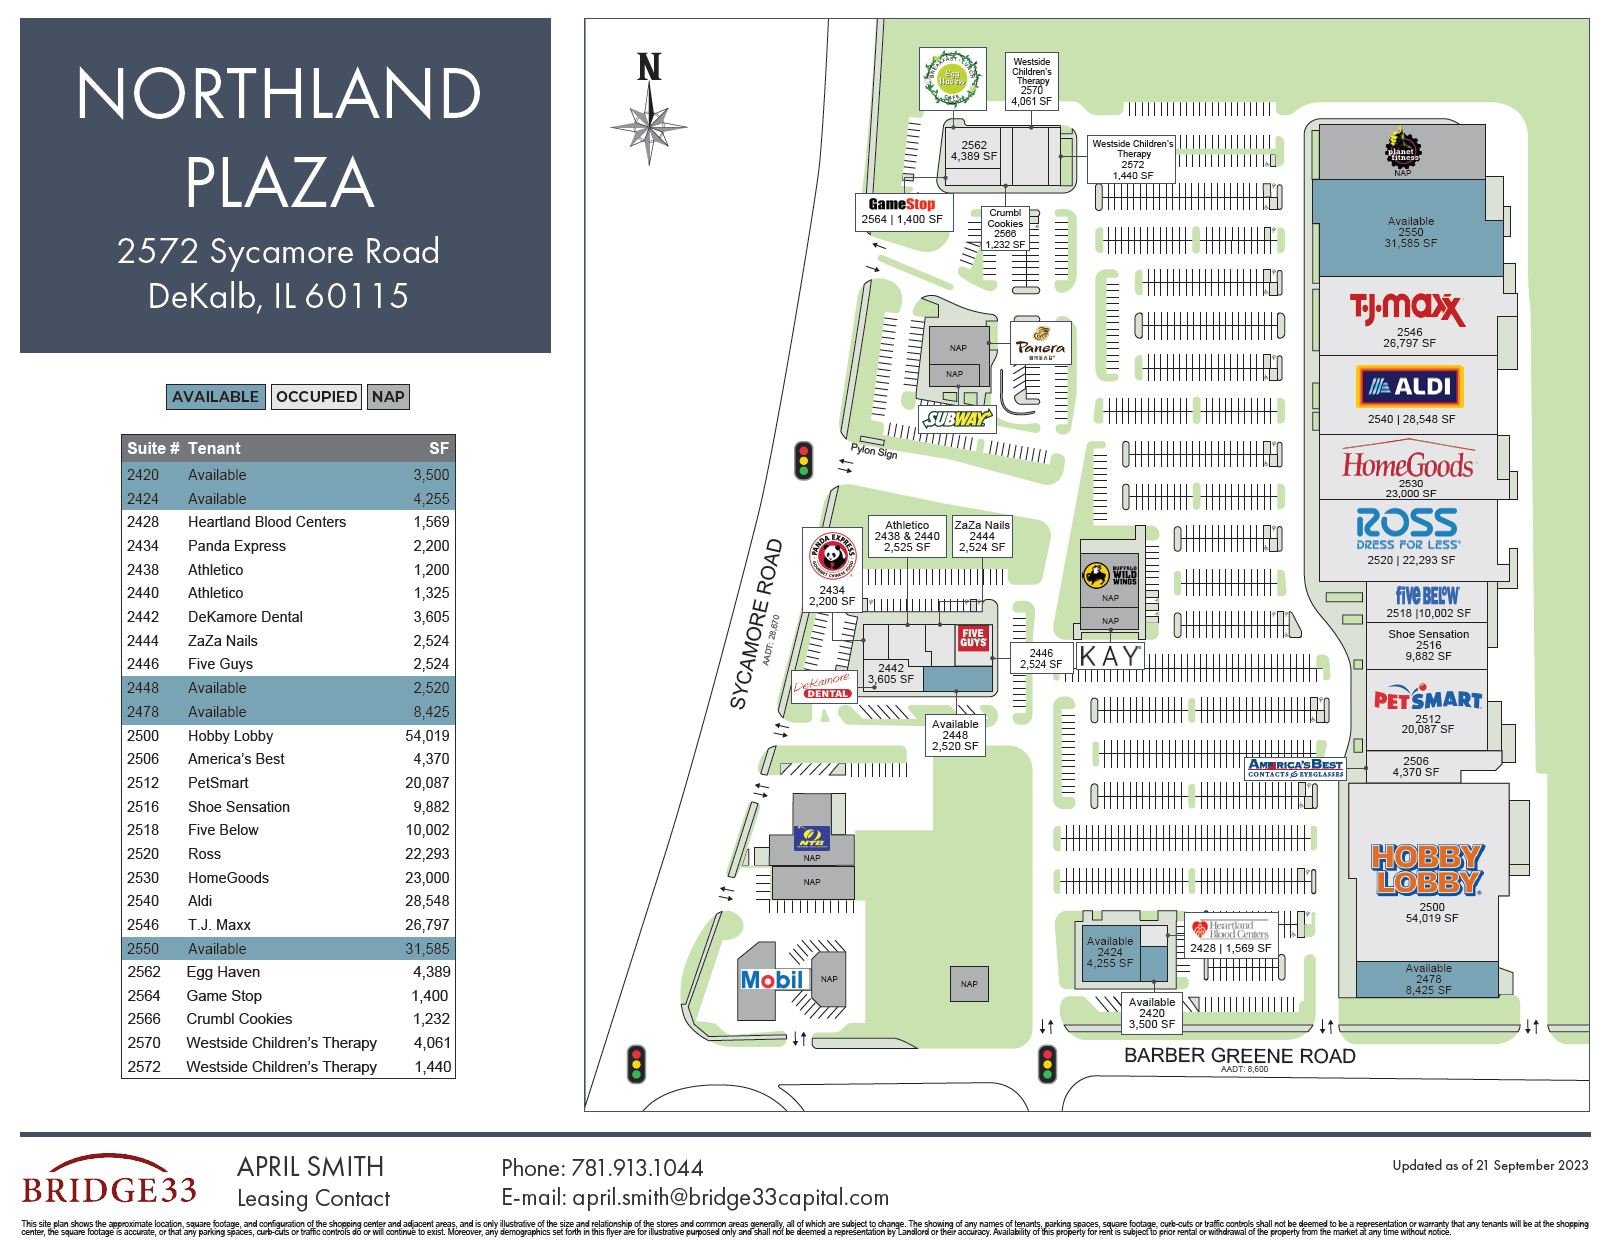 ross park mall map